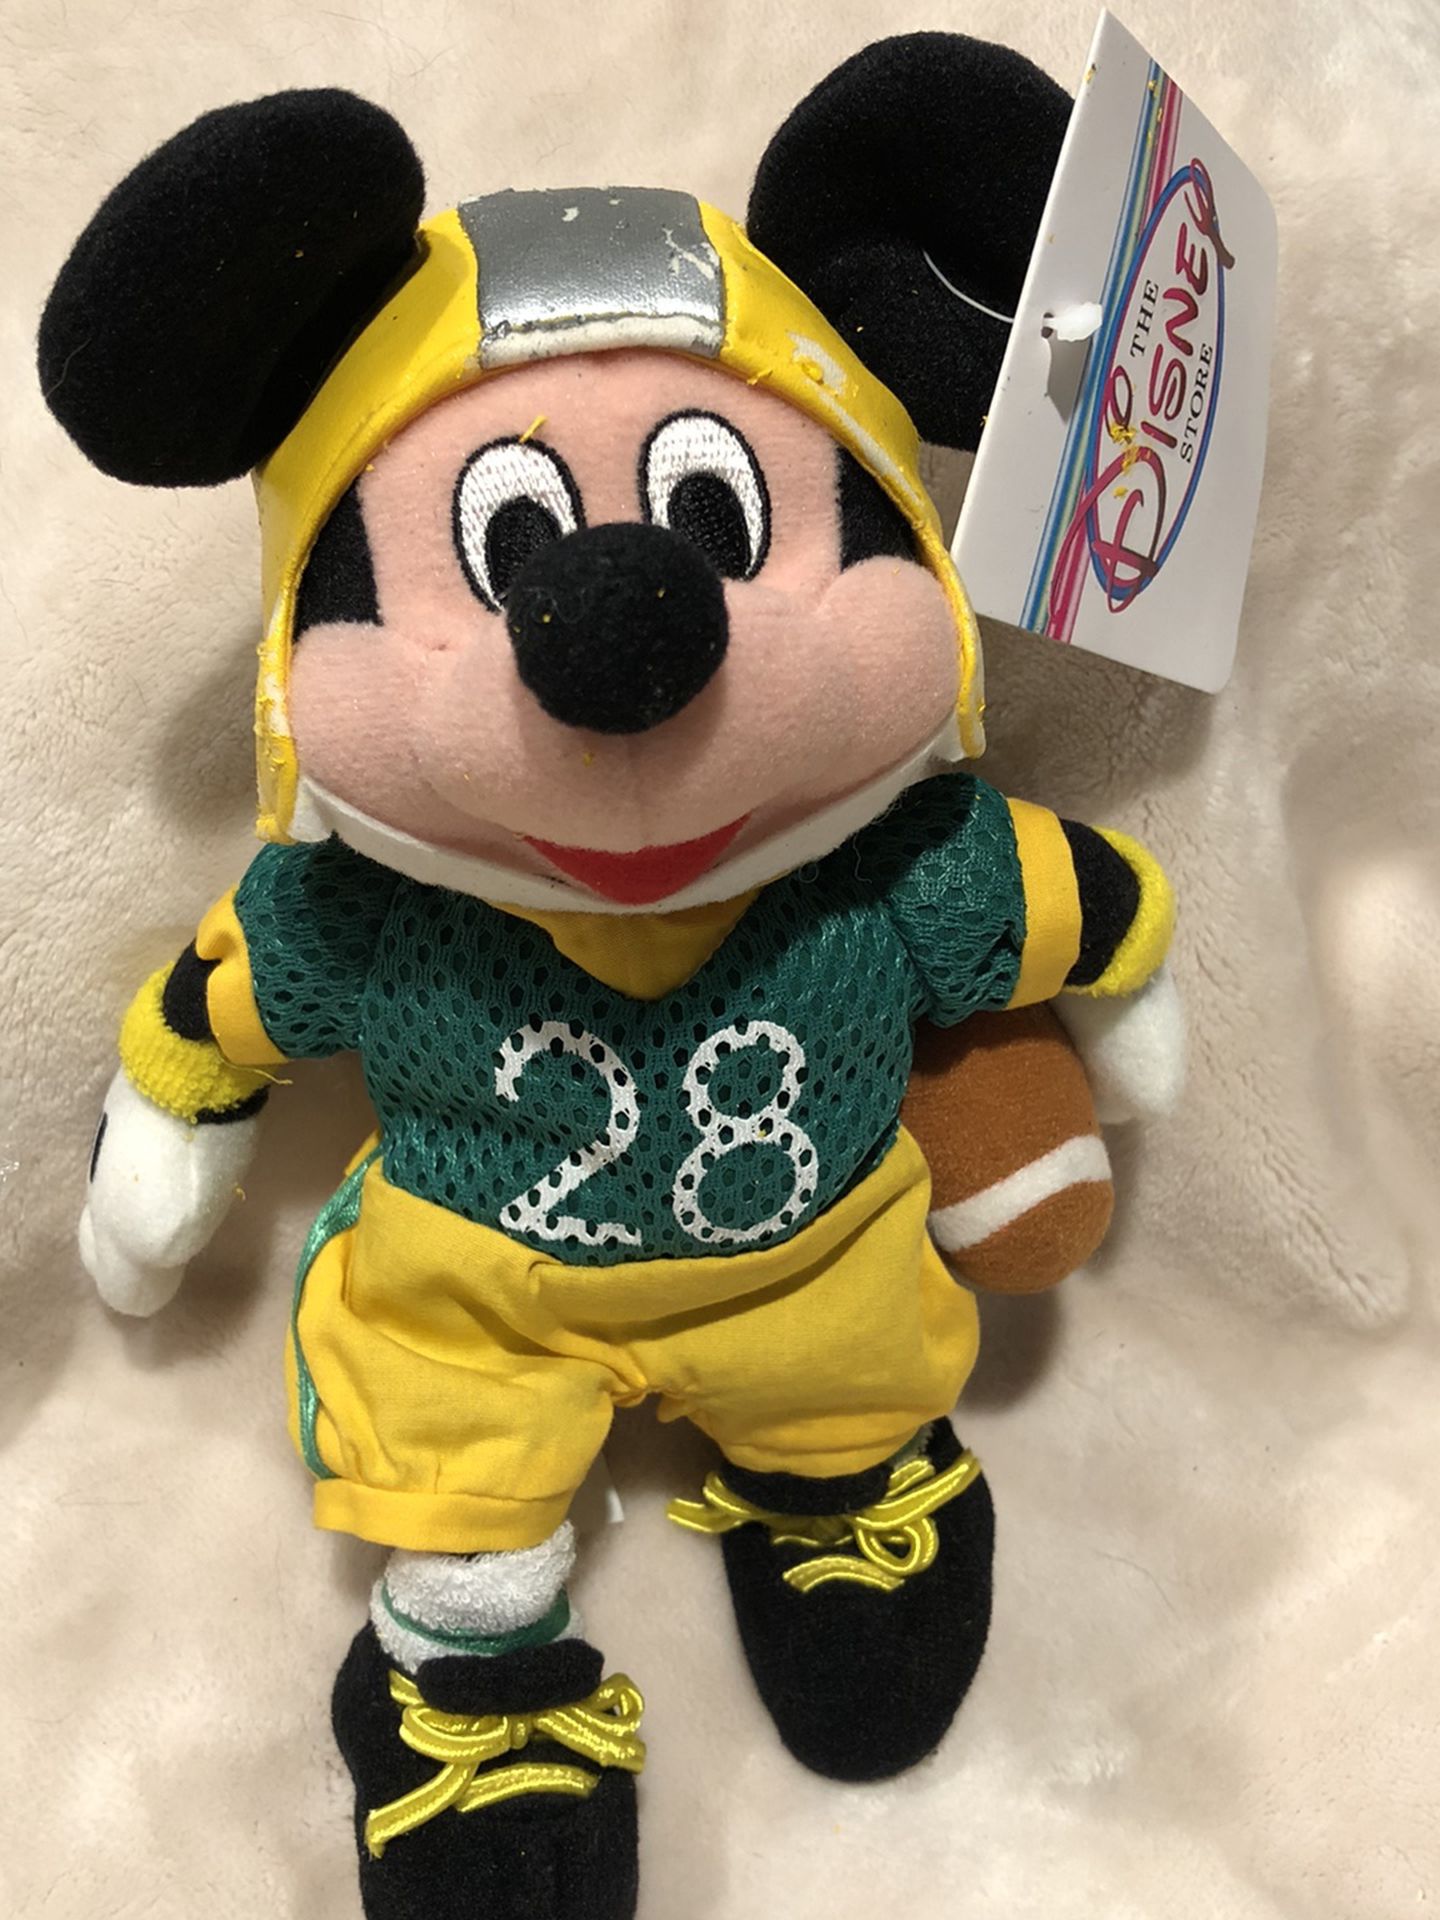 The Disney Store 8” Bean Bag Plush Mickey Mouse Football Player